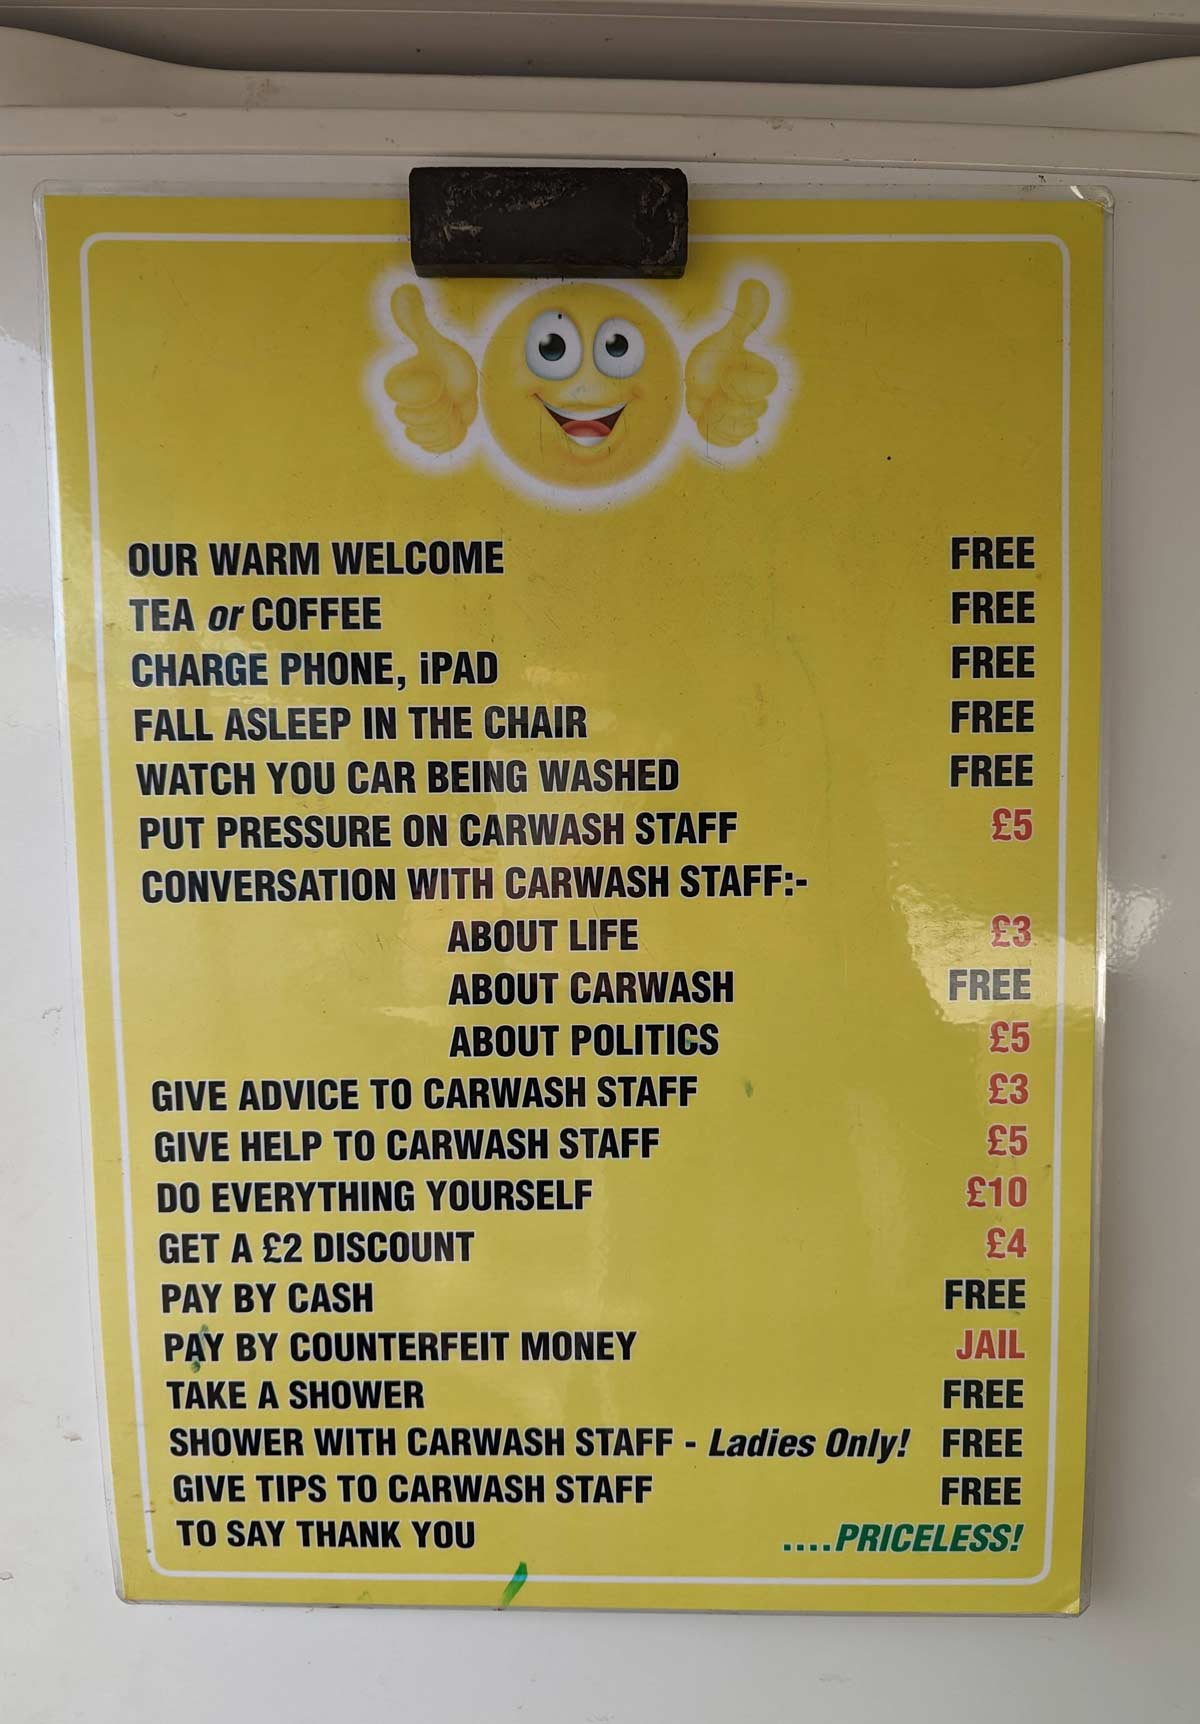 This carwash price list